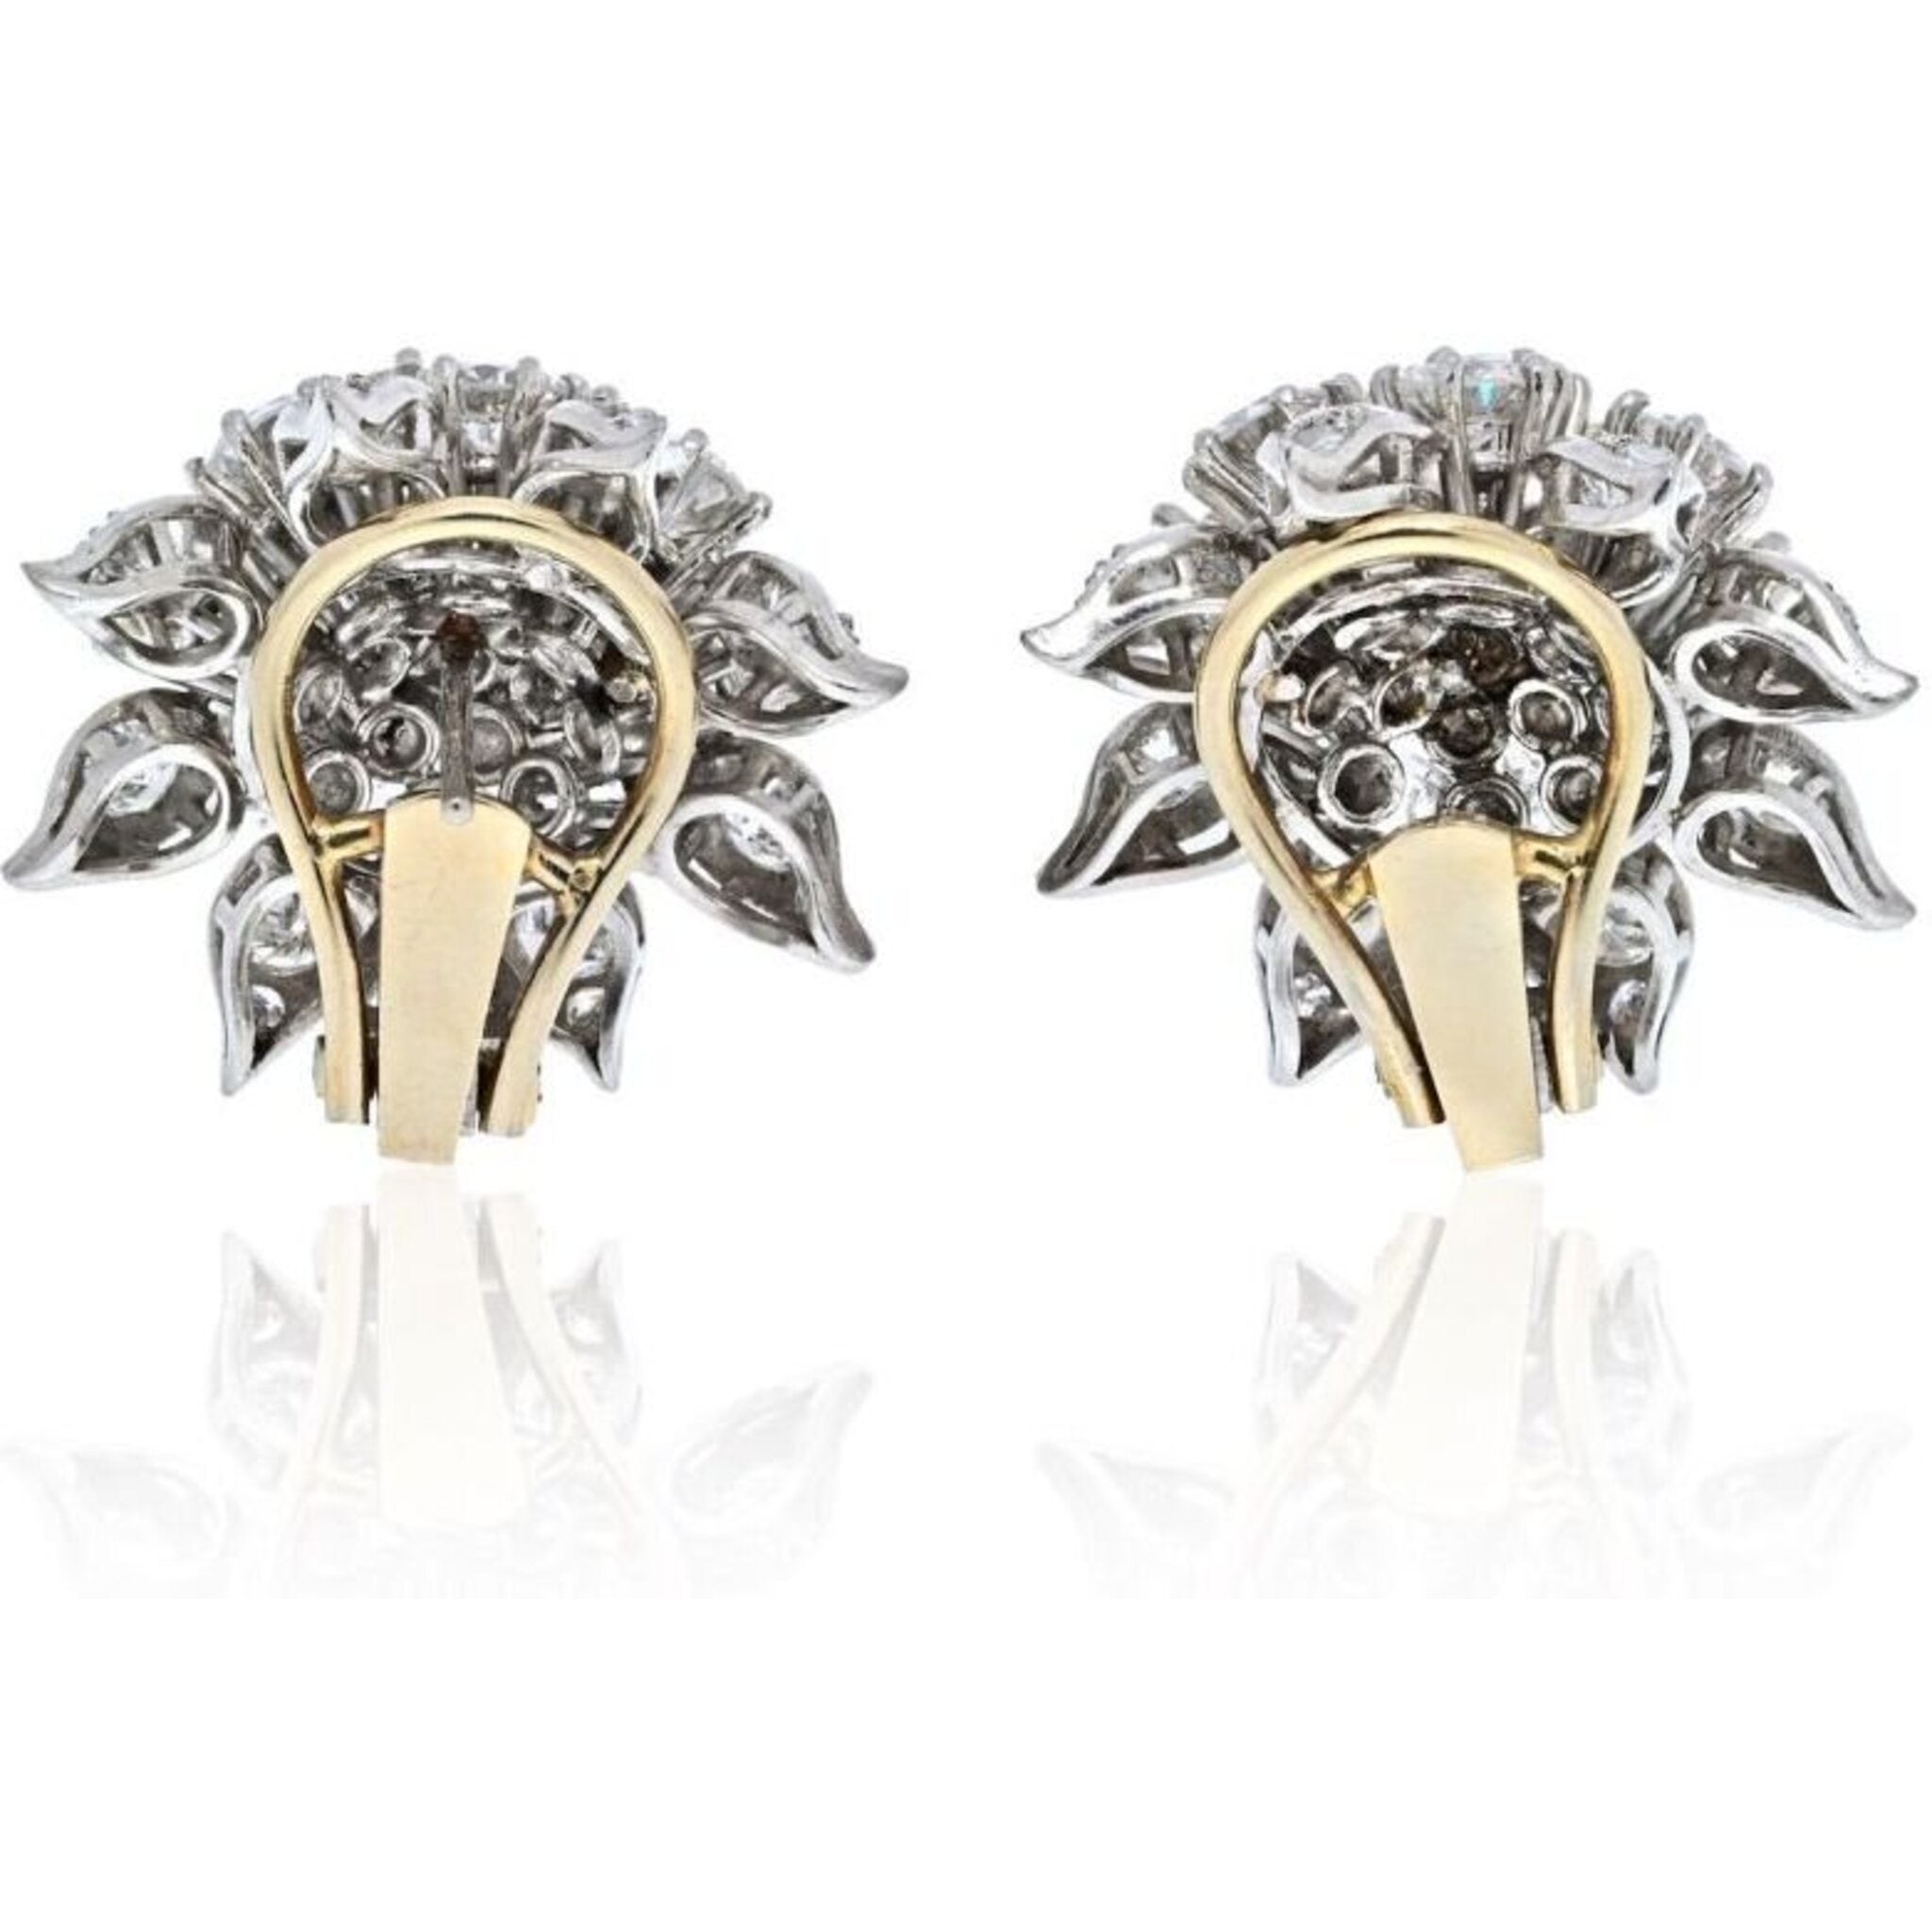 Platinum 12.00ctw Round Cut Diamond Cluster Earrings